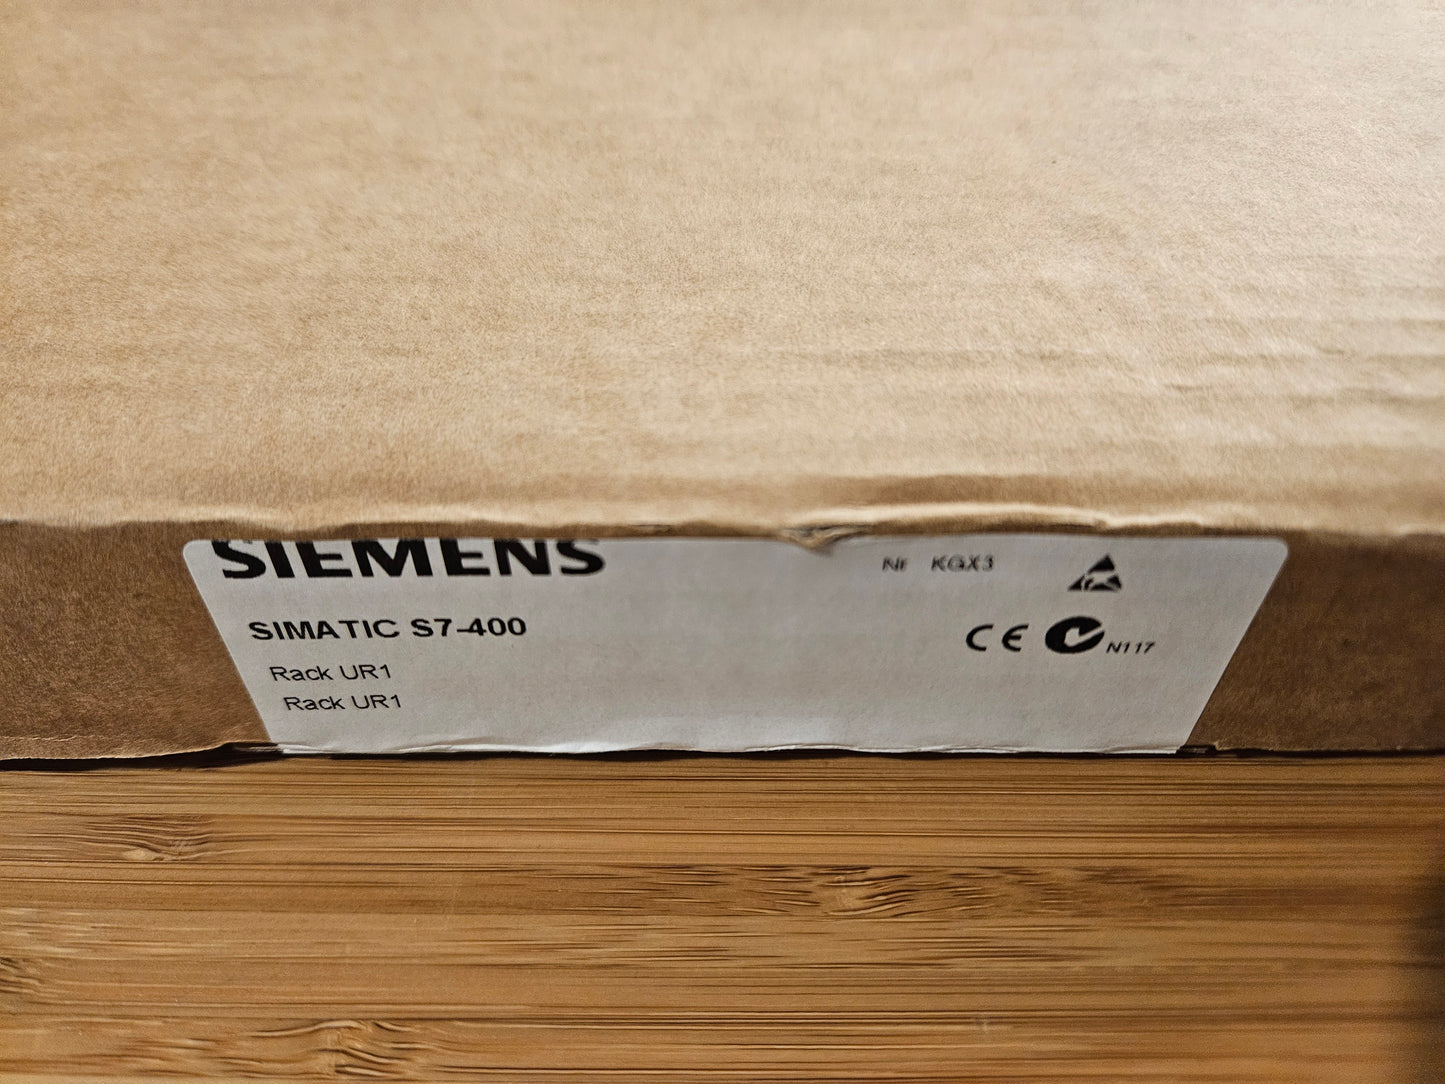 Siemens 6ES7400-1TA01-0AA0 6ES7 400-1TA01-0AA0 SIMATIC S7-400, Baugruppen Träger UR1